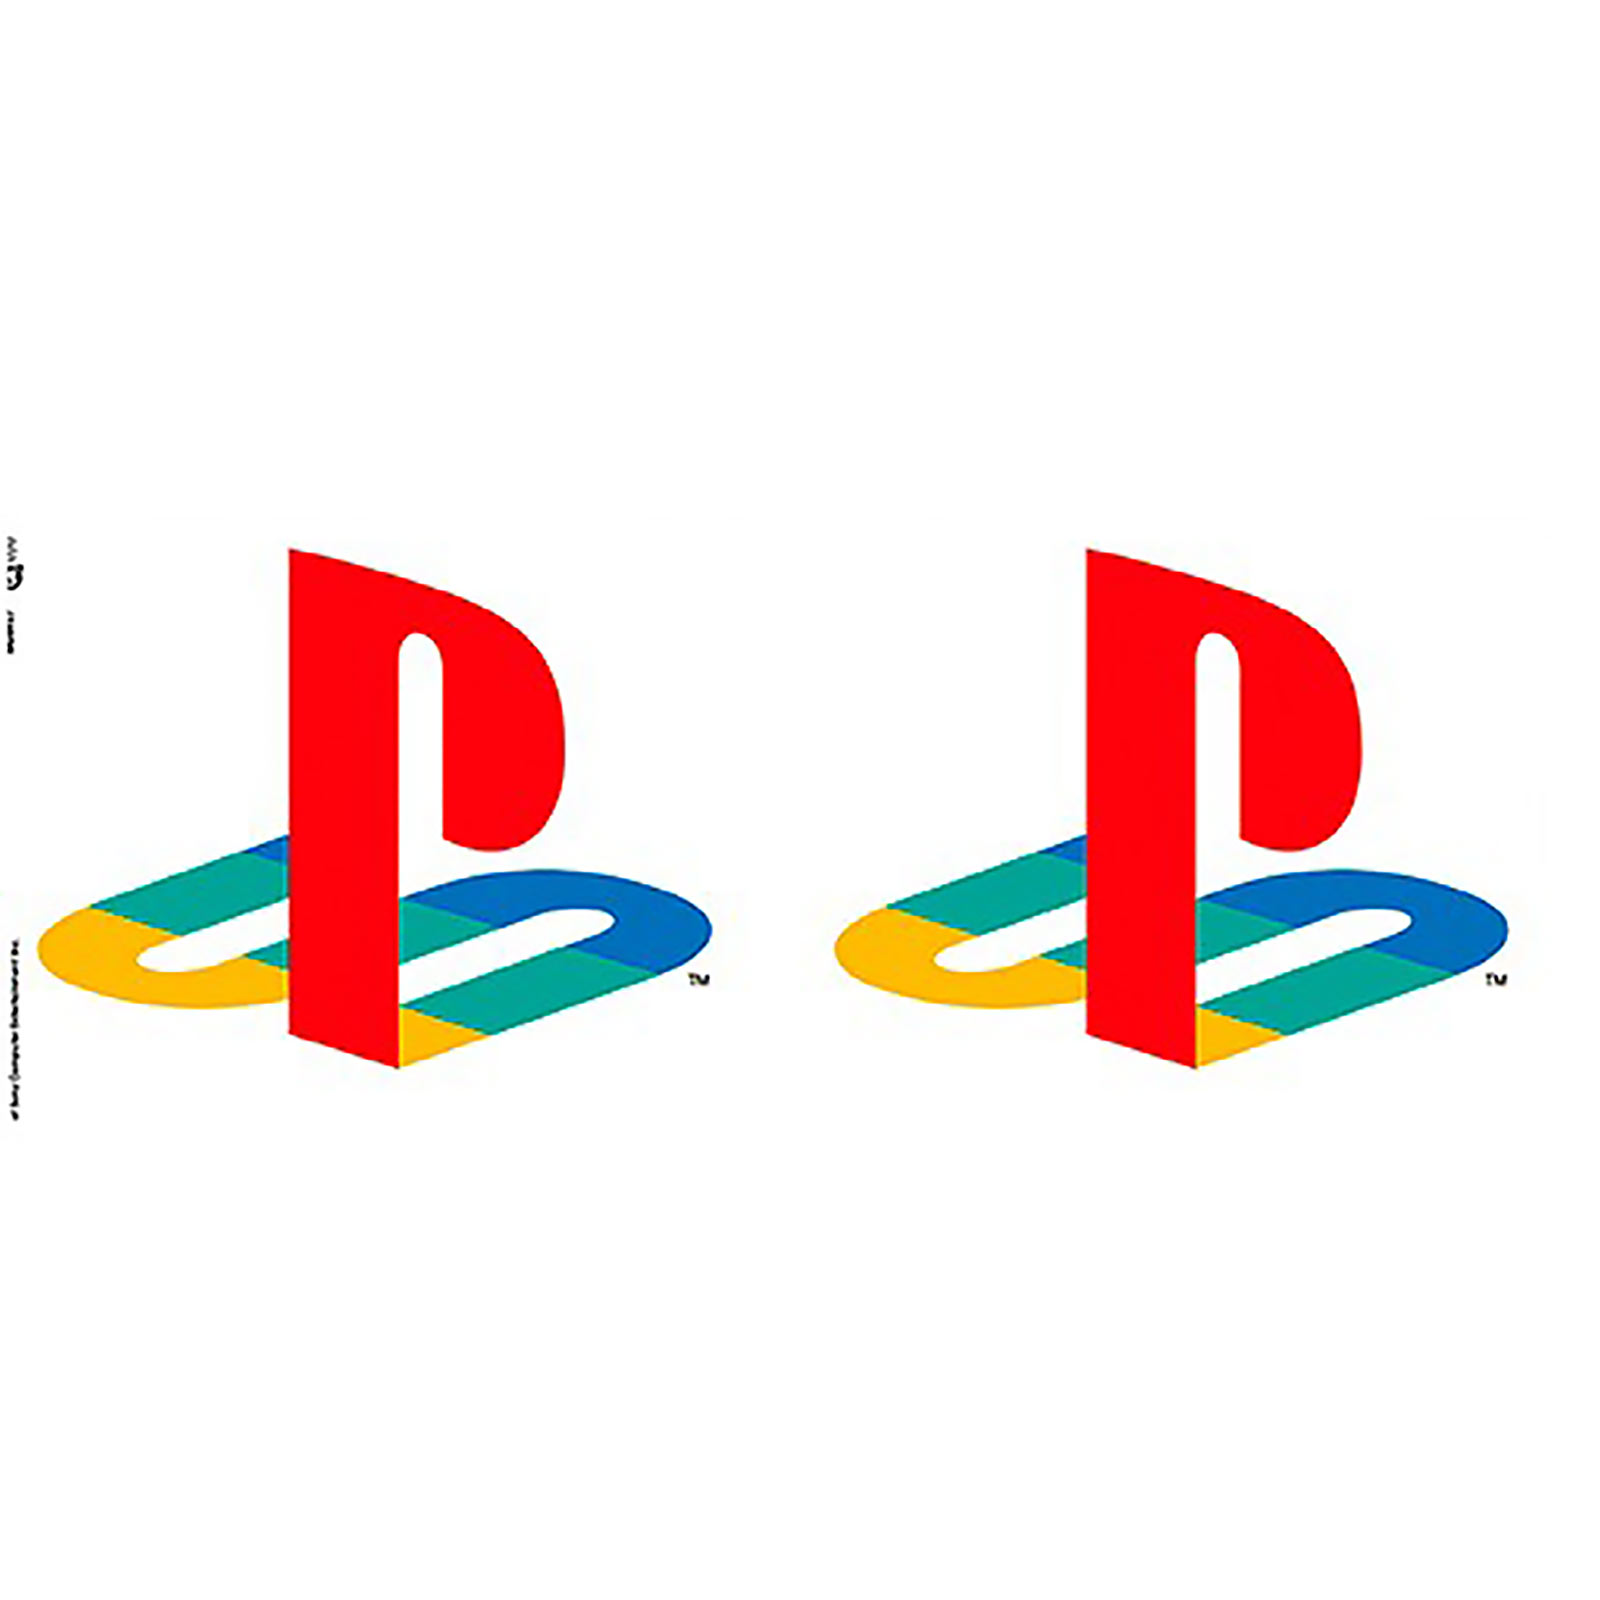 PlayStation - Tasse Logo